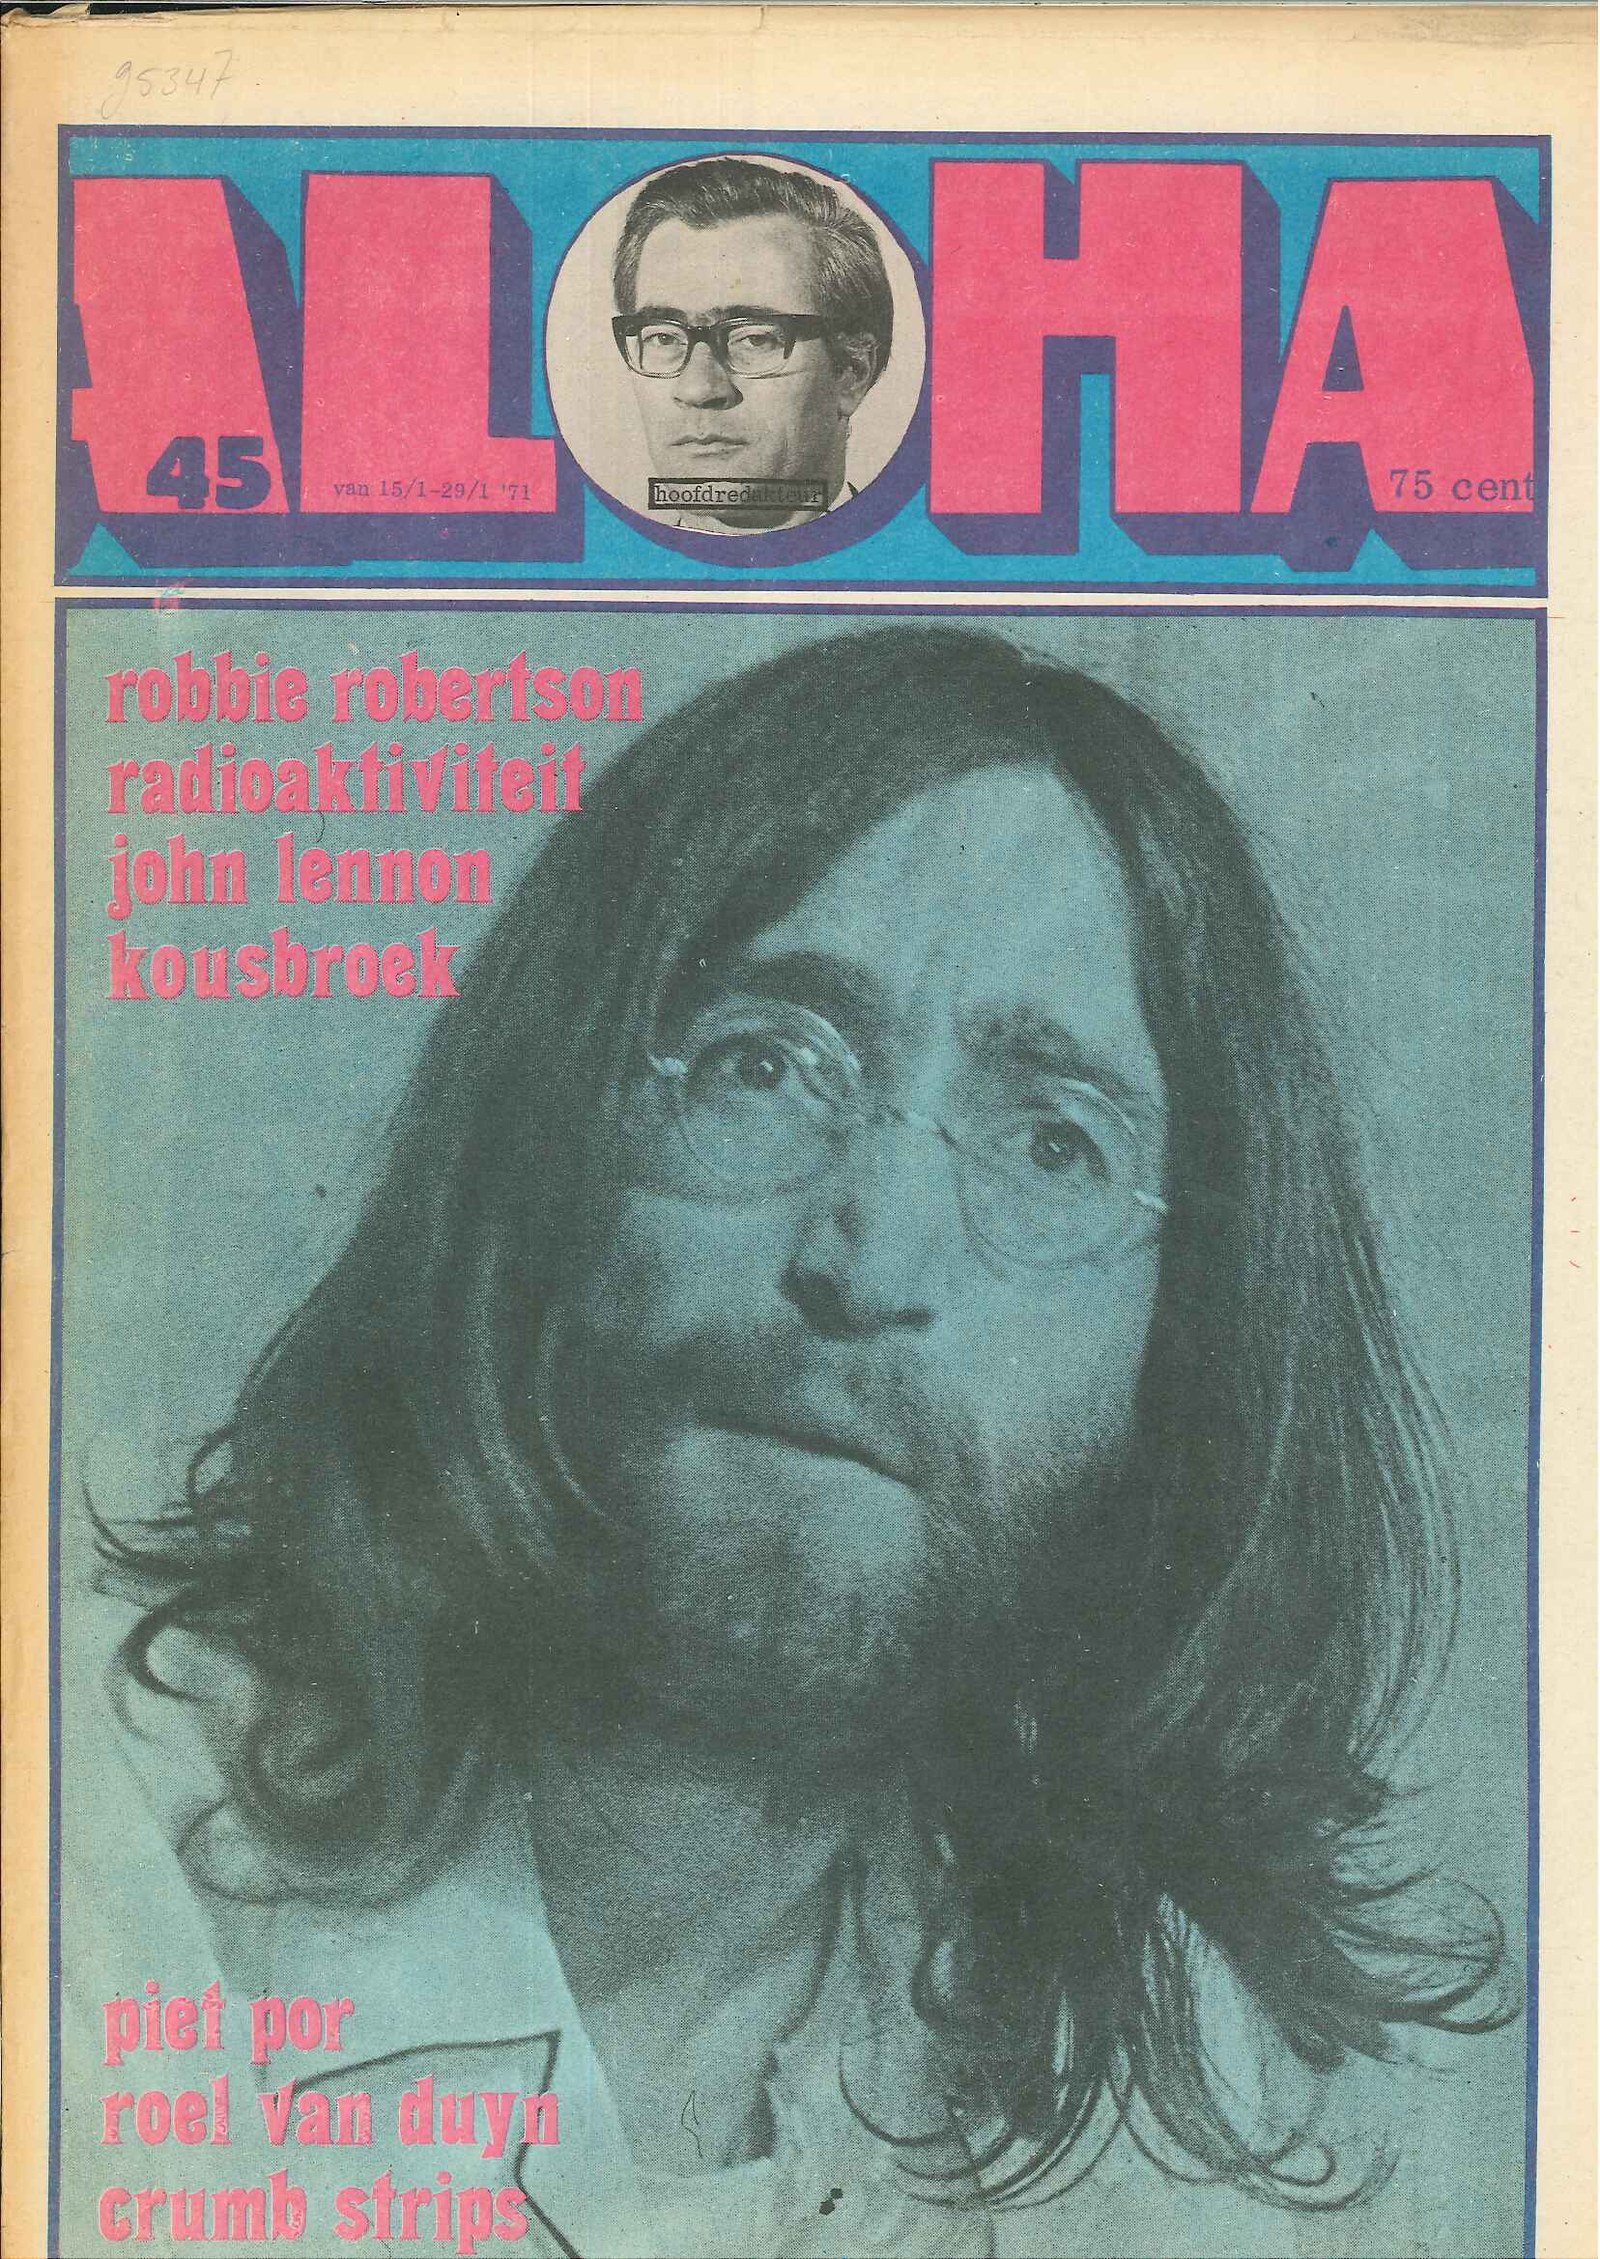 https://mediabank.vanabbemuseum.nl/vam/files/alexandria/publicaties/Aloha45_1971.jpg